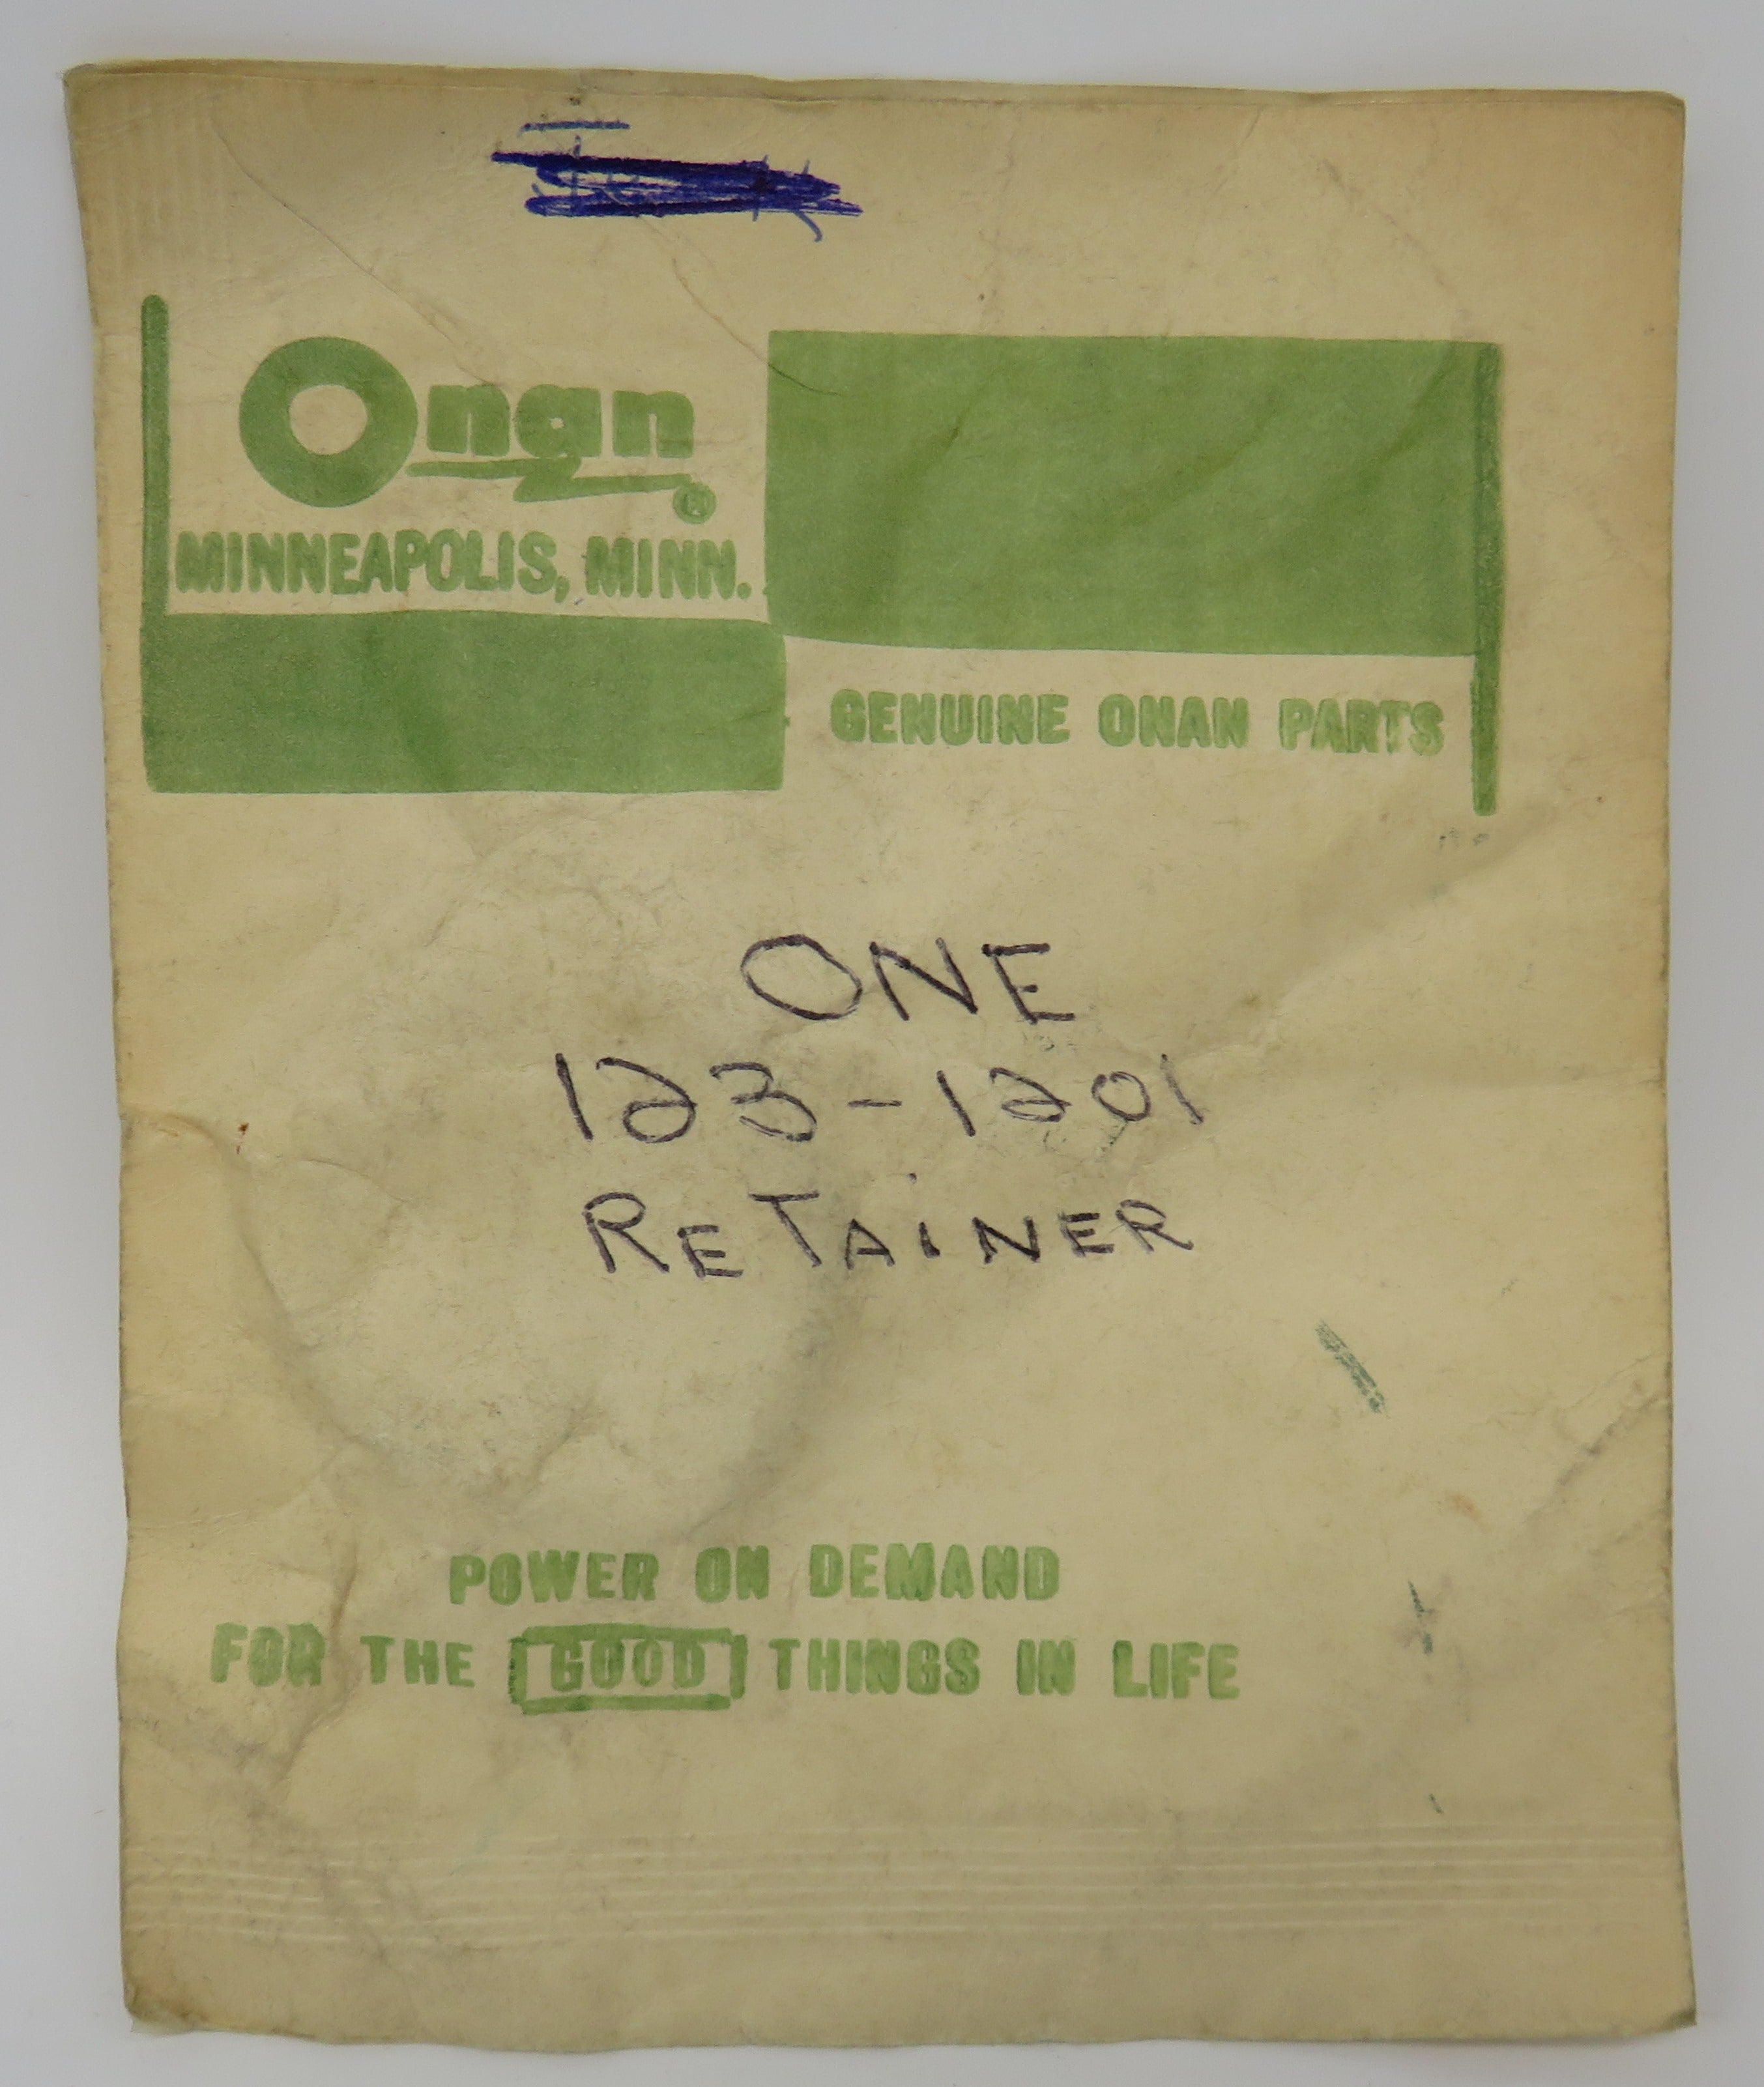 123-1201 Onan Retainer 